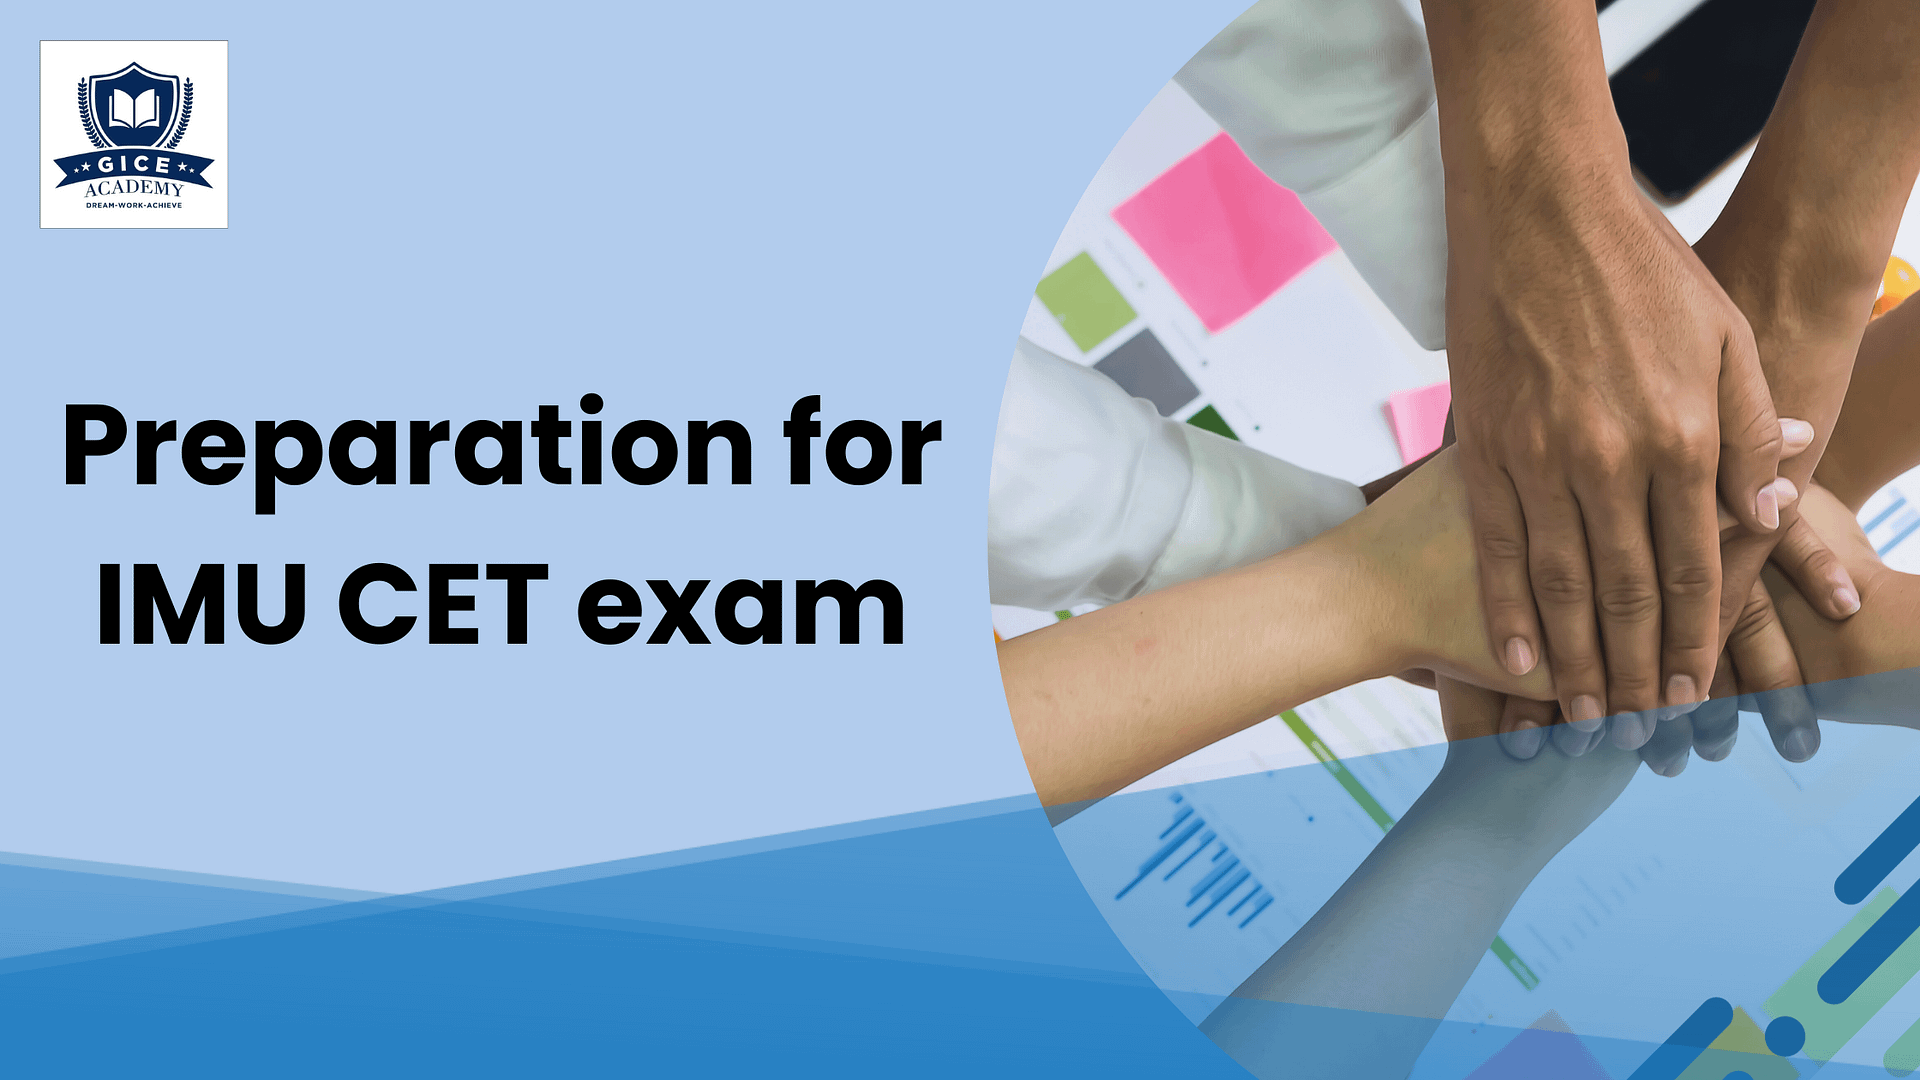 How to prepare for IMU CET exam